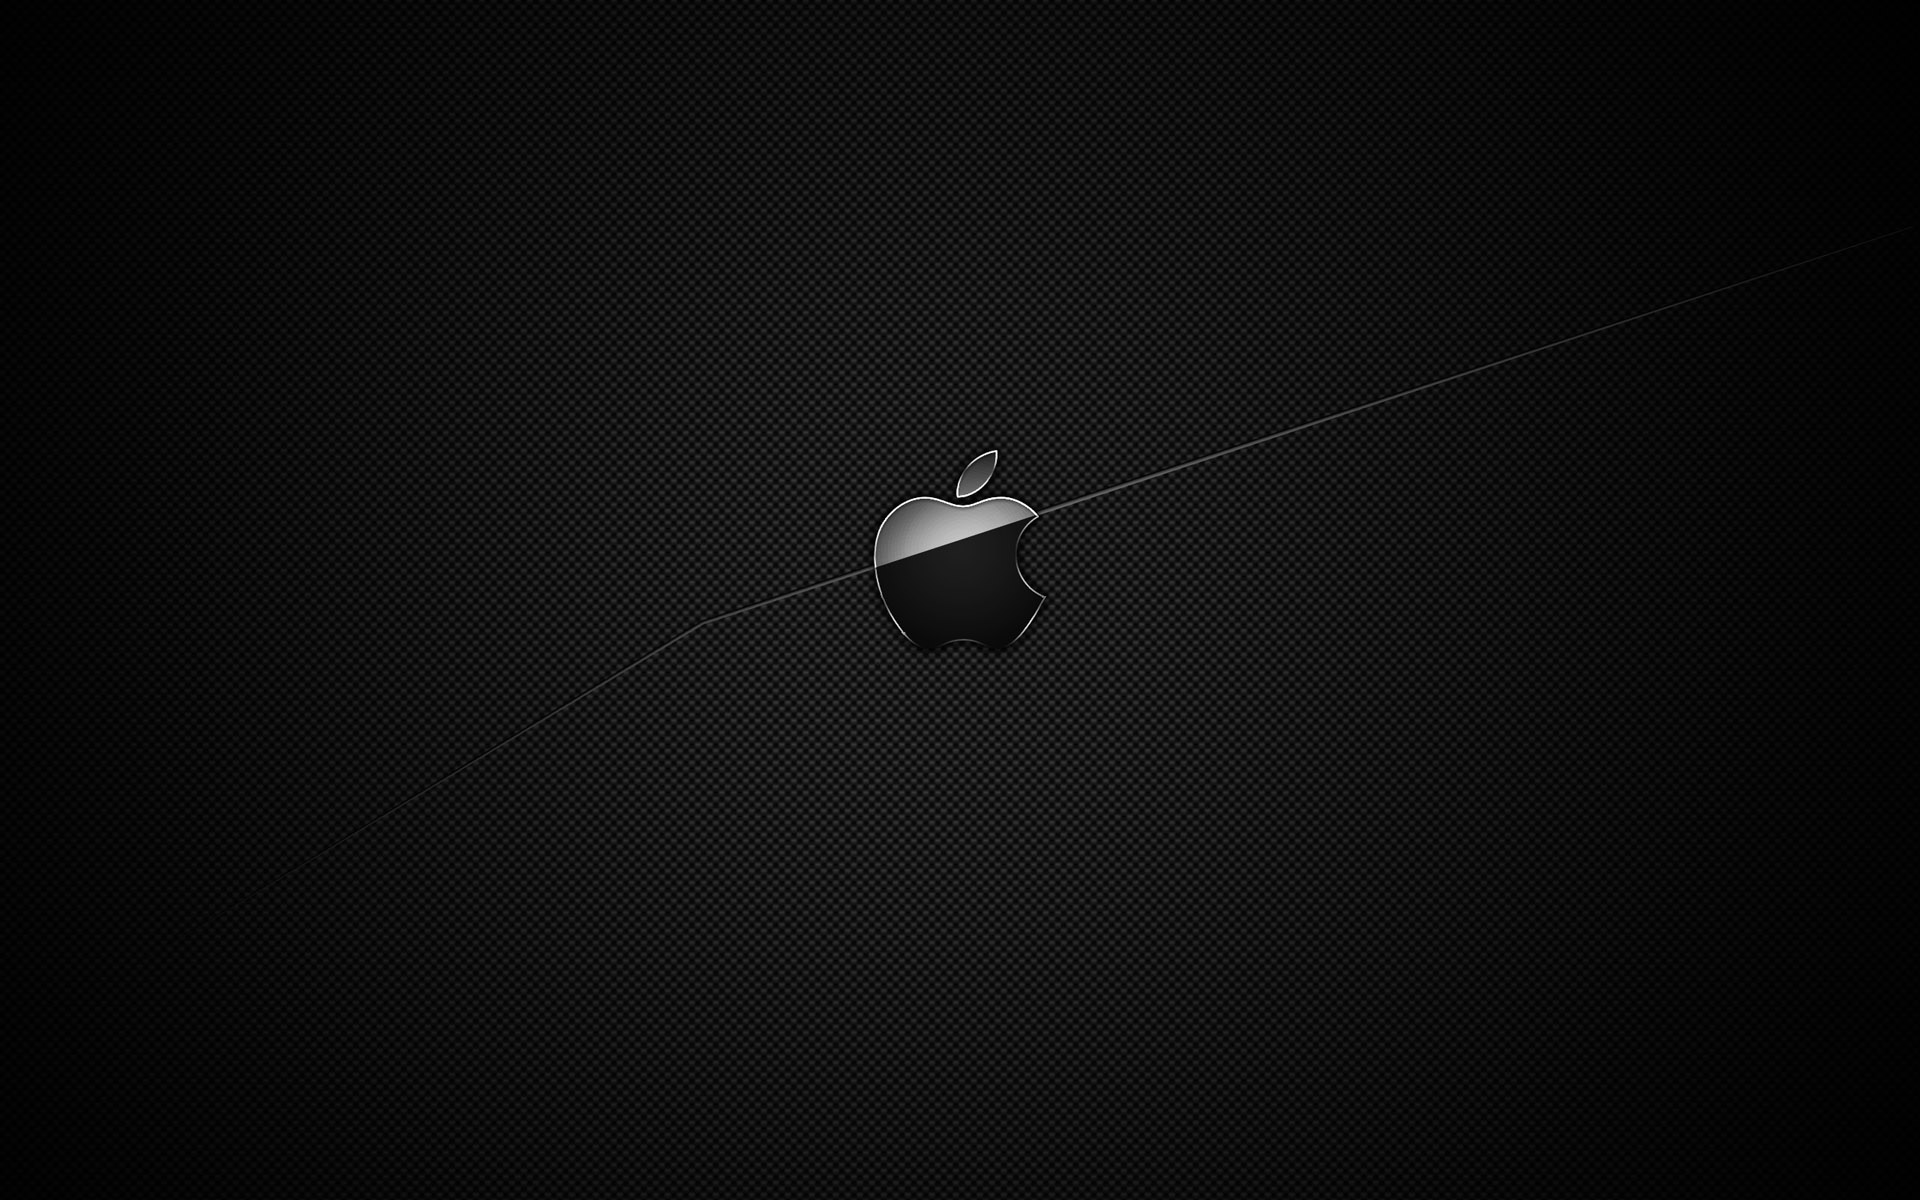 Black Apple Symbol On Dark Background Half Part Lighted Up A